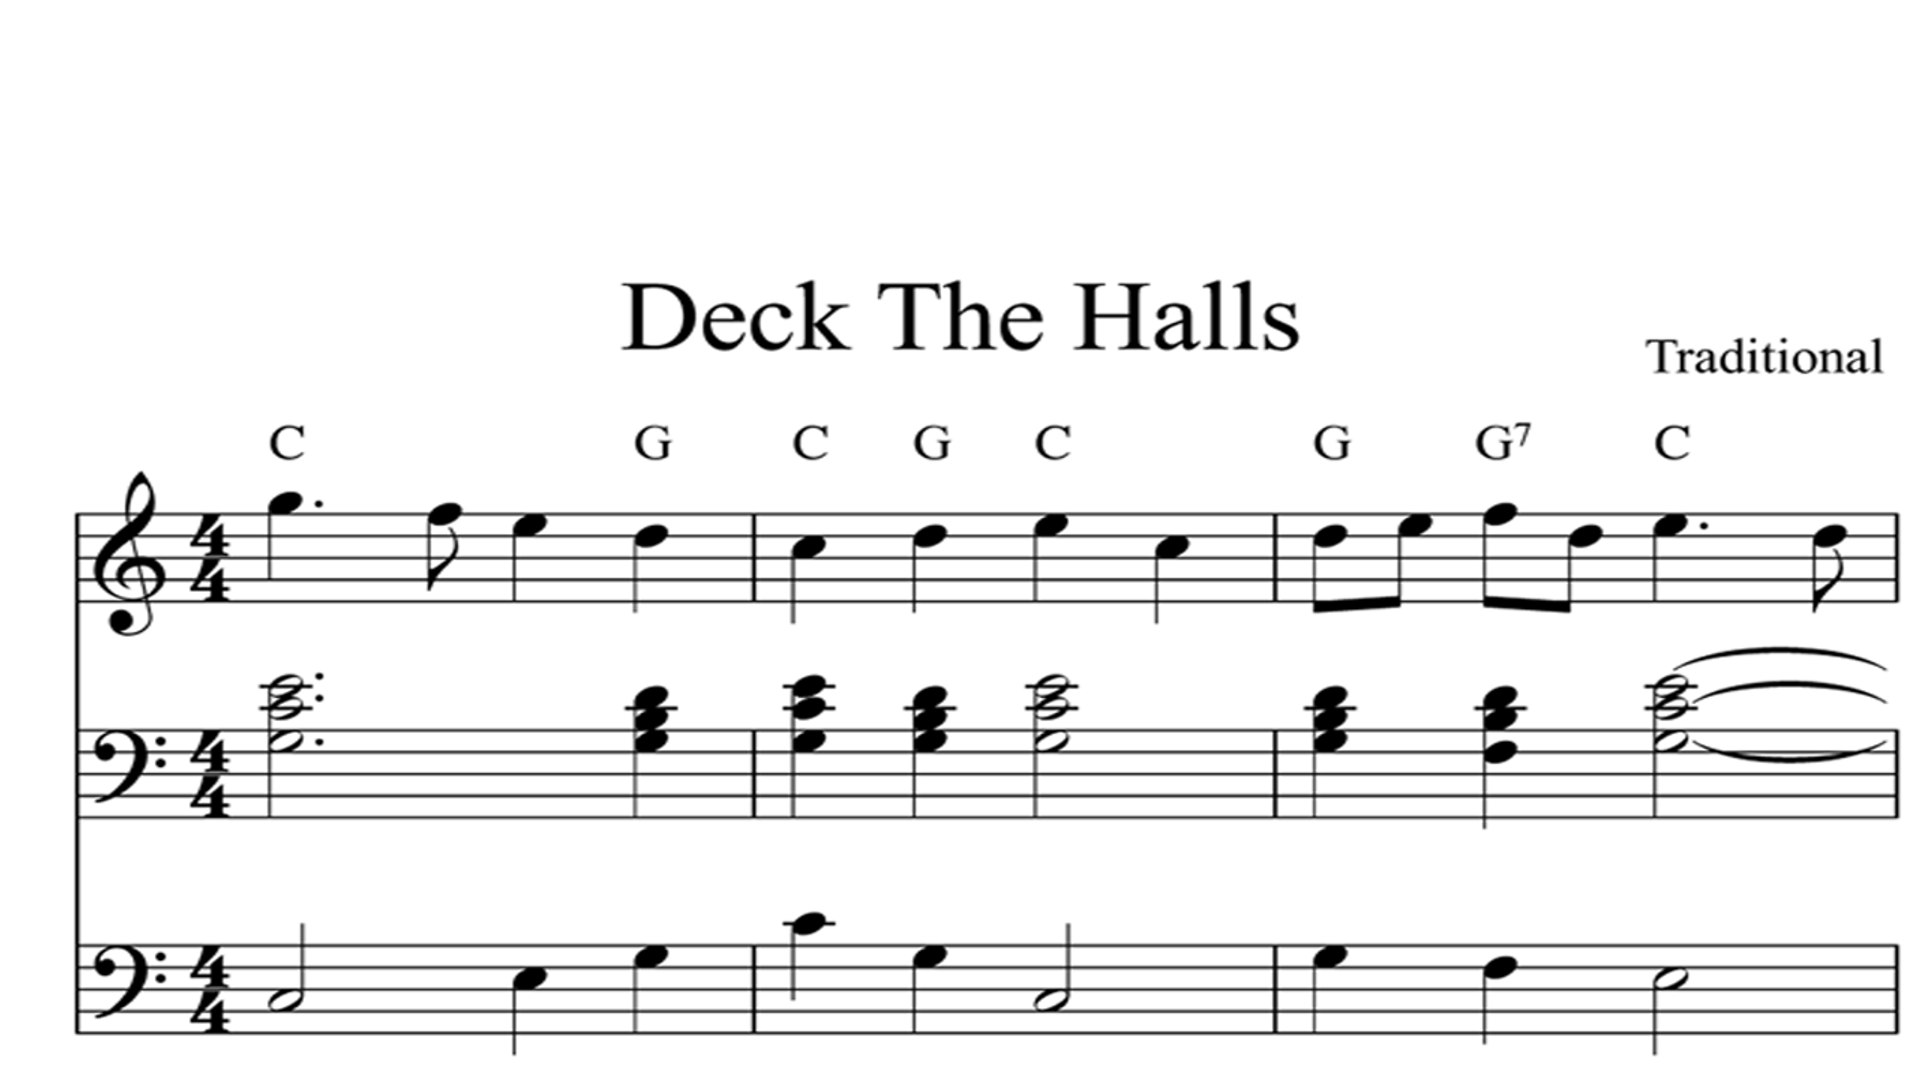 Deck The Halls: DIGITAL SHEET MUSIC Piano Organ & Keyboard Book 1 - video  Dailymotion